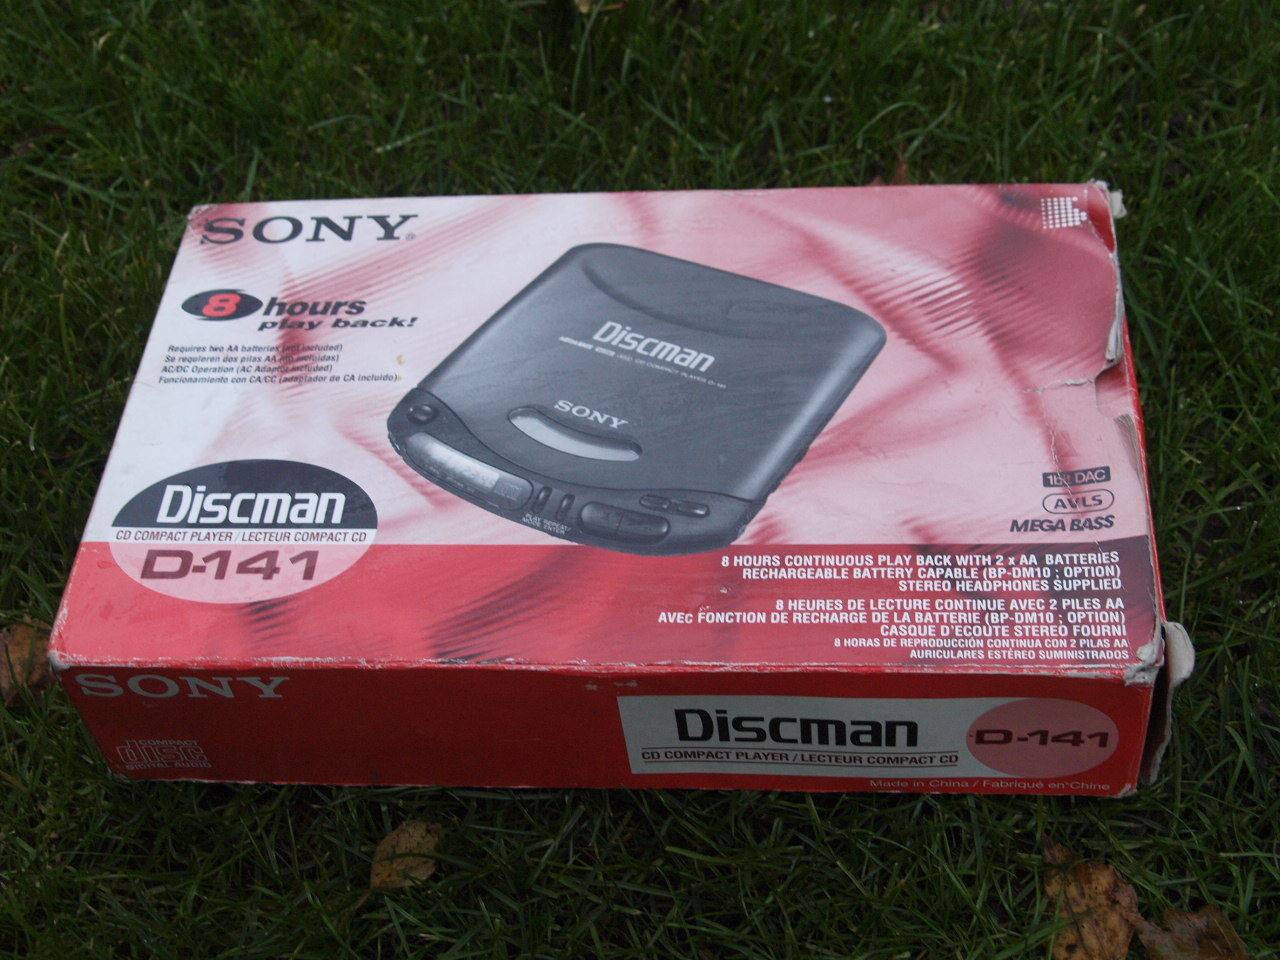 Sony D-141